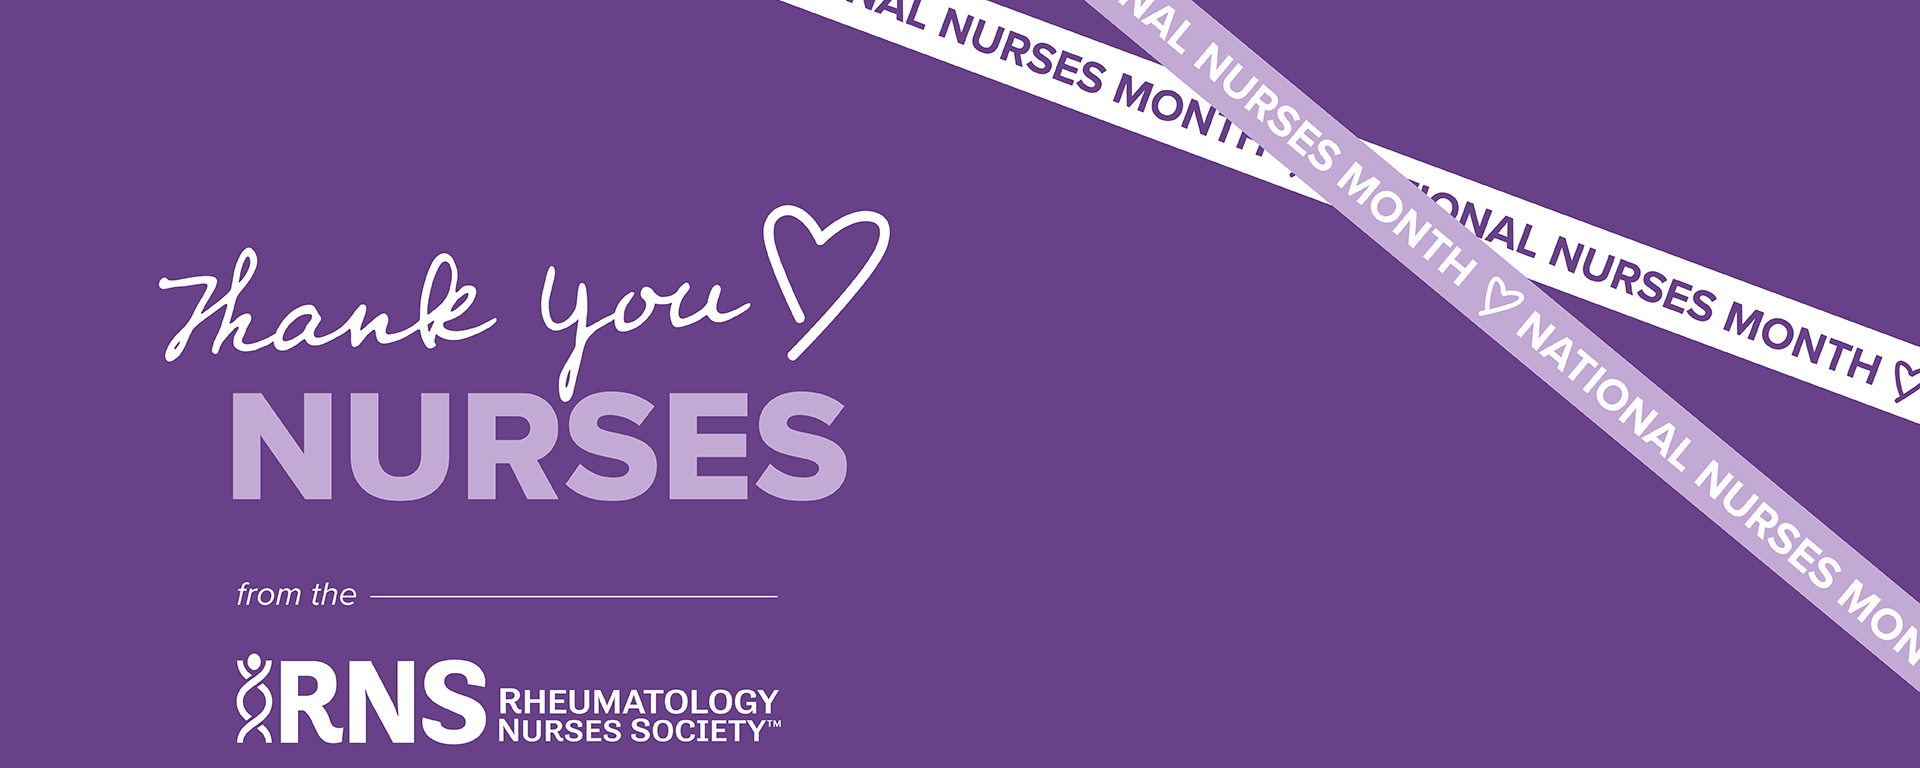 National Nurses Month 2021 – Thank You Nurses!